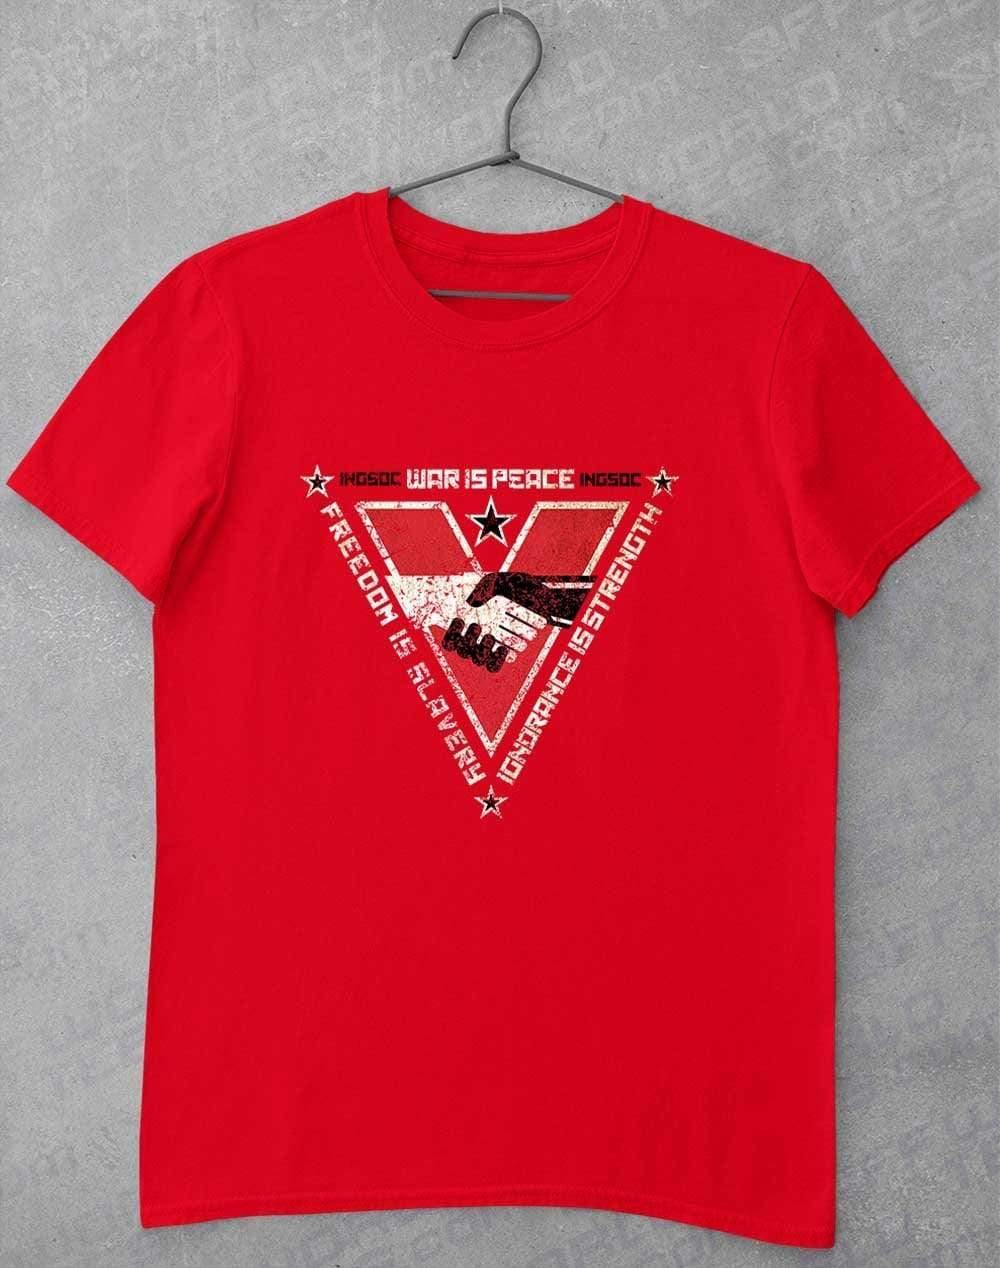 INGSOC Triangular Slogans T-Shirt S / Red  - Off World Tees